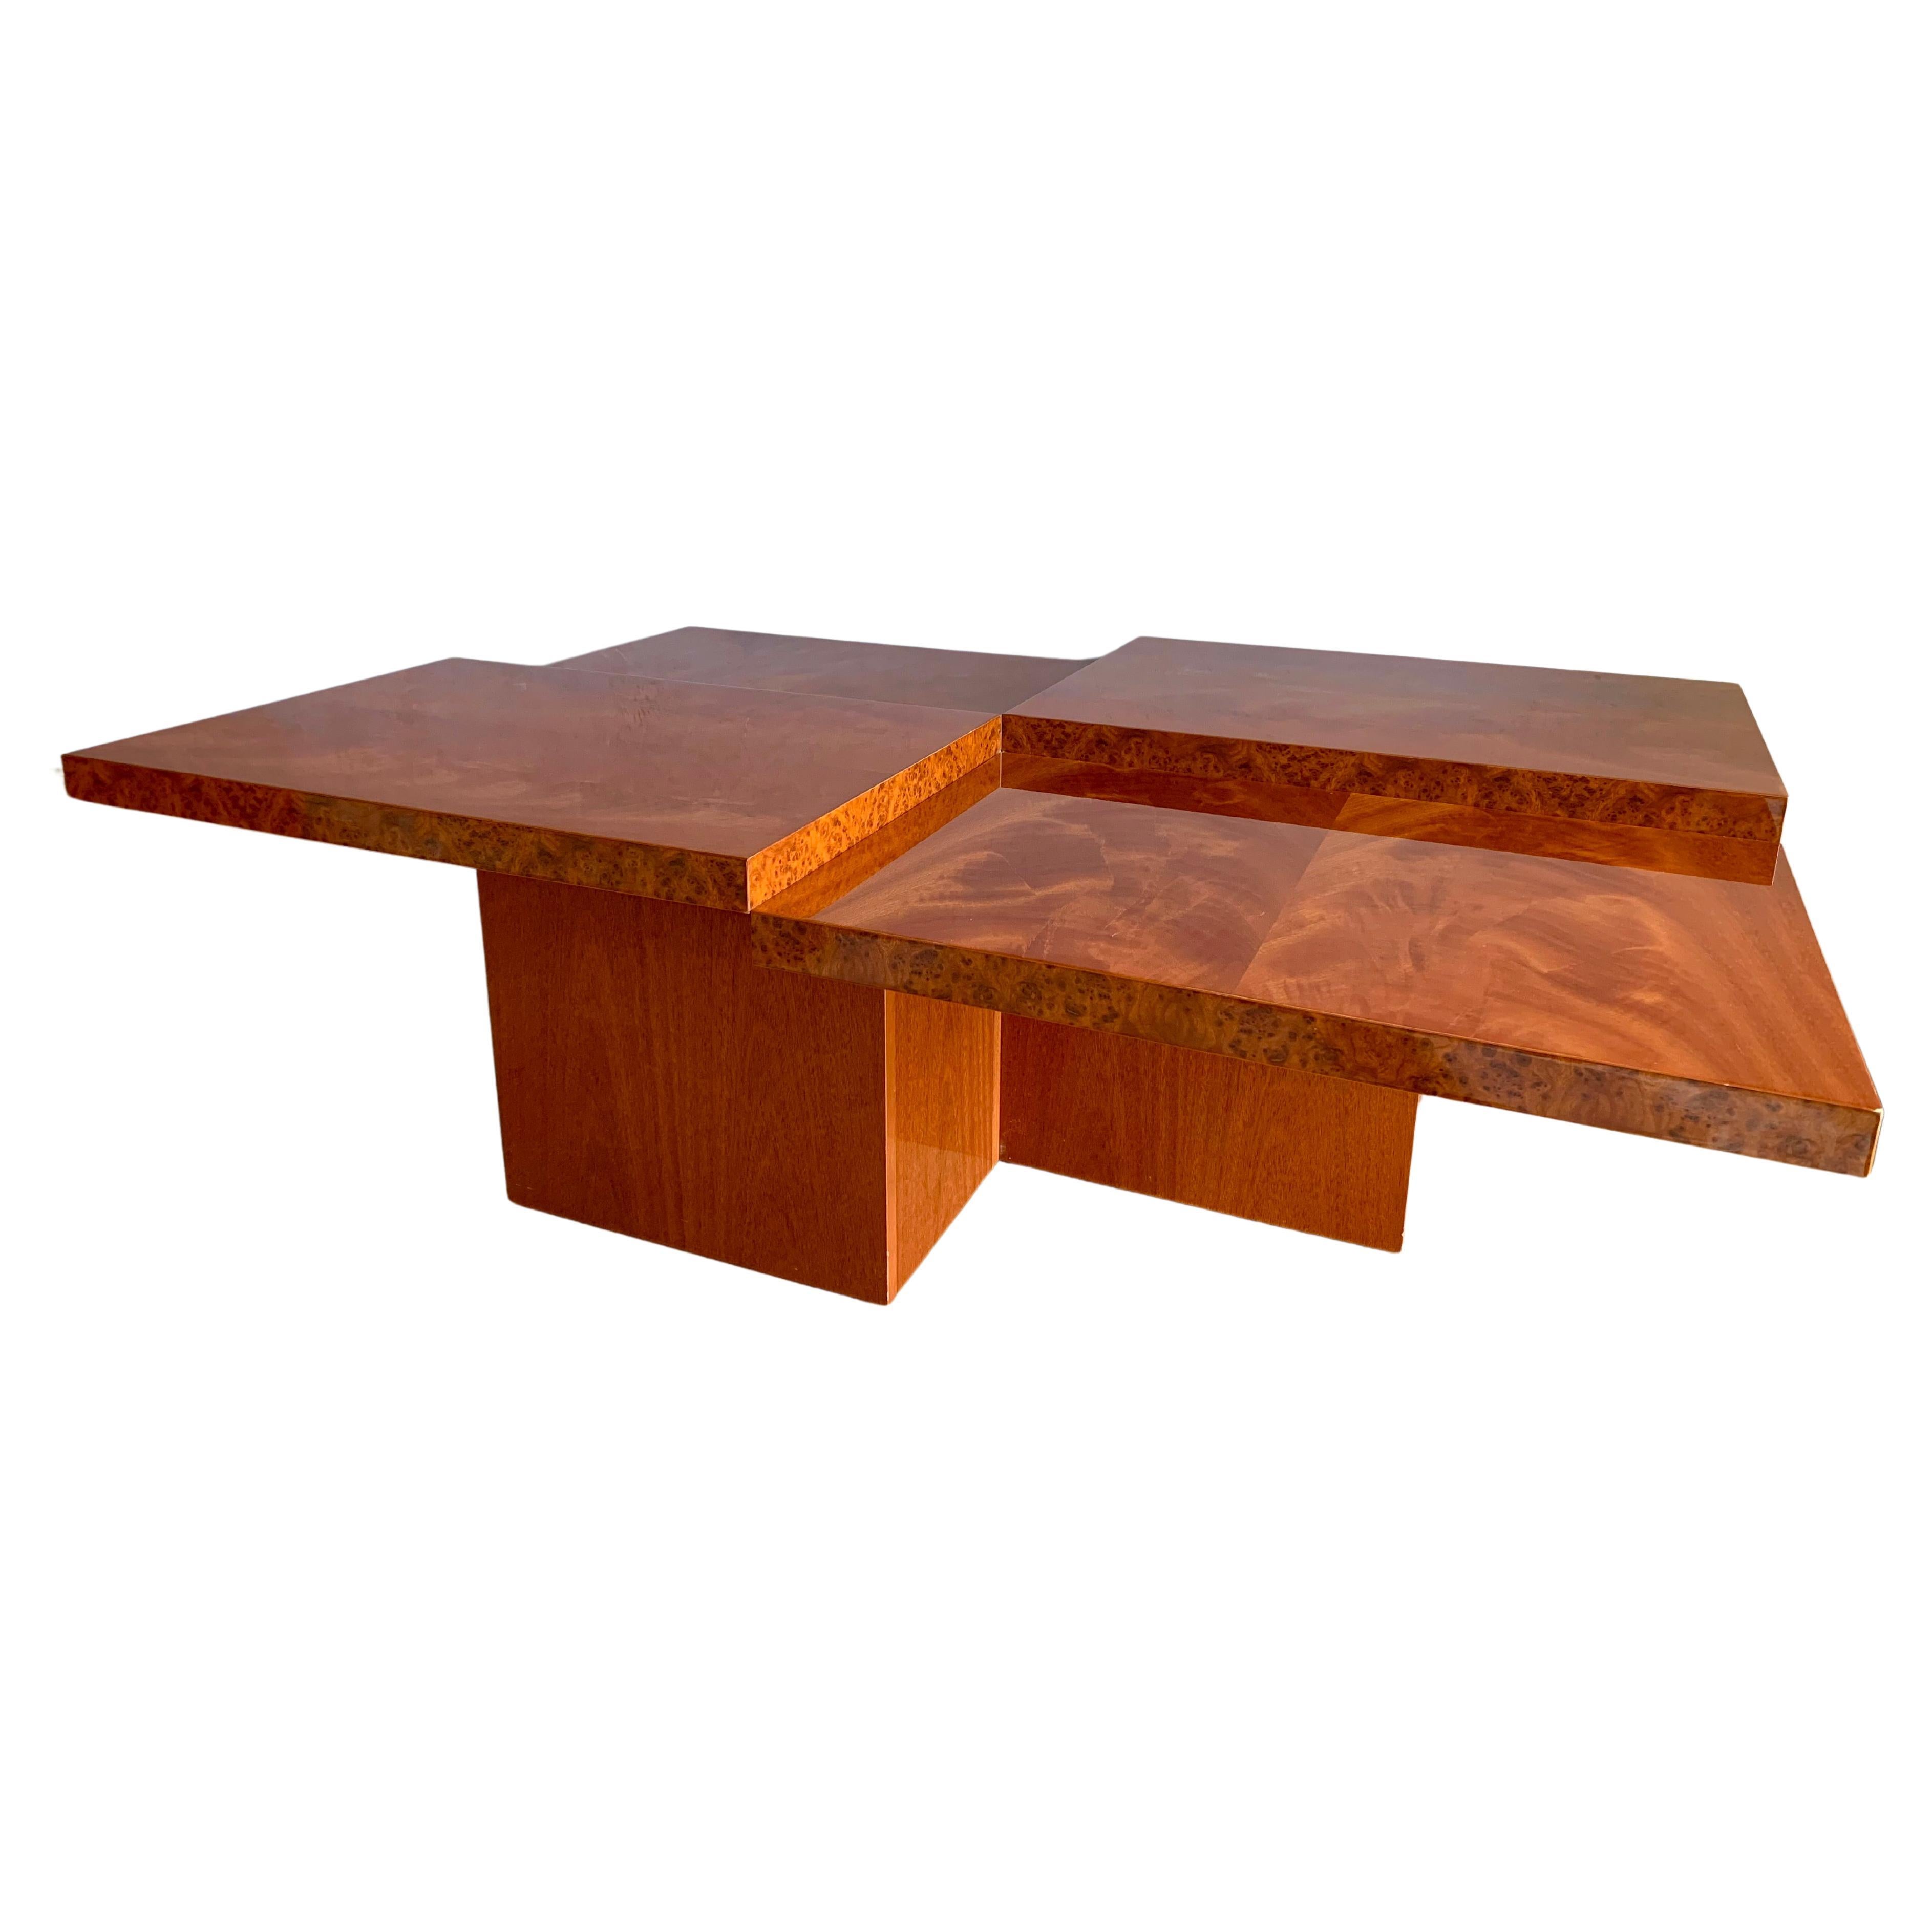 Italian Burl and Flame Grain Art Deco Moderne Cubist Bauhaus Coffee Table For Sale